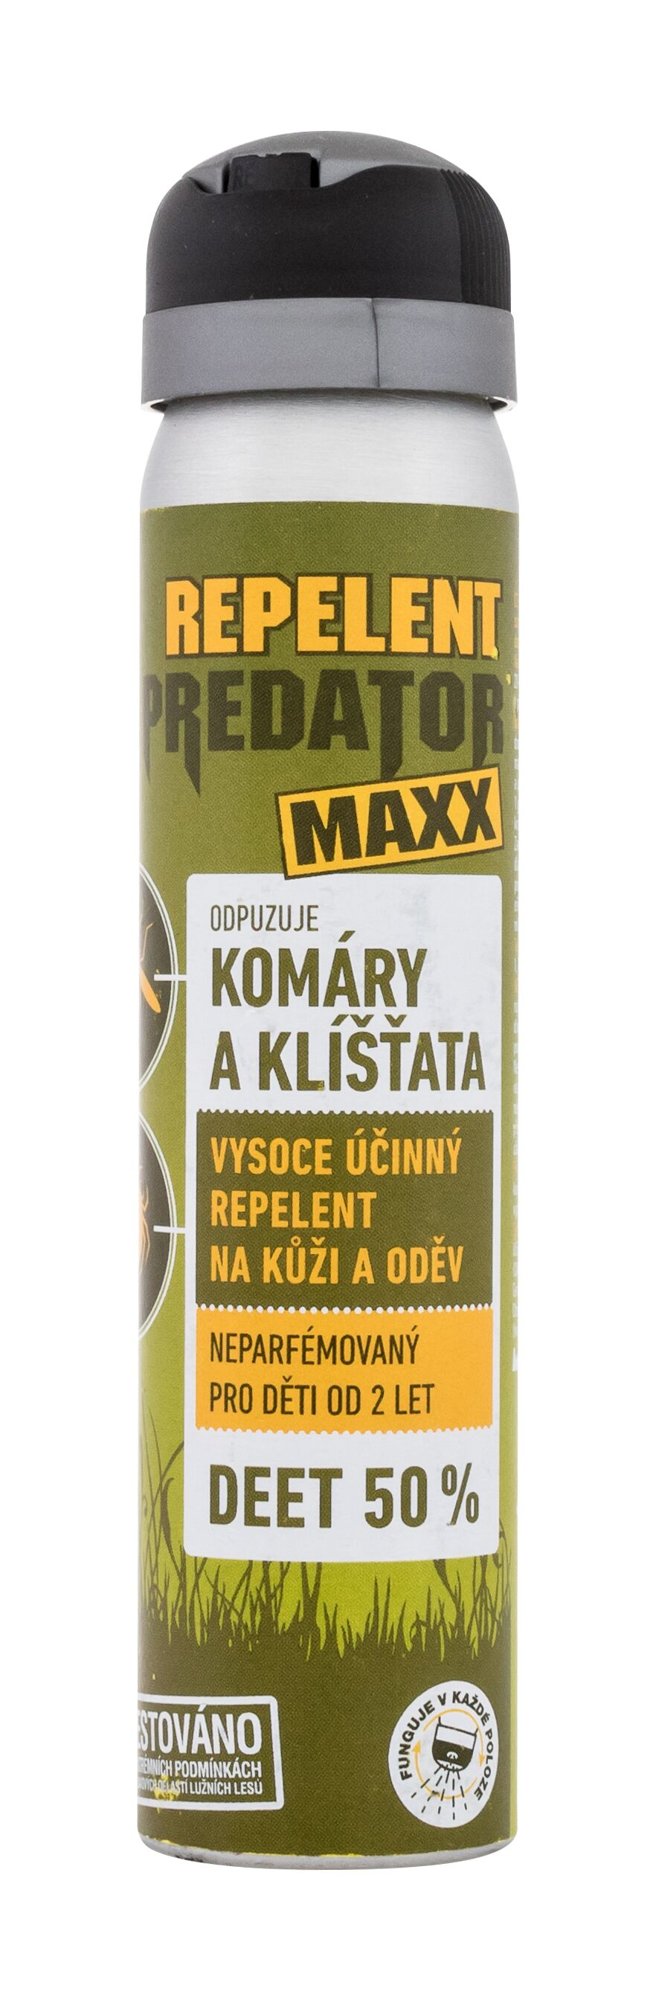 PREDATOR Repelent Maxx 90ml repelentas